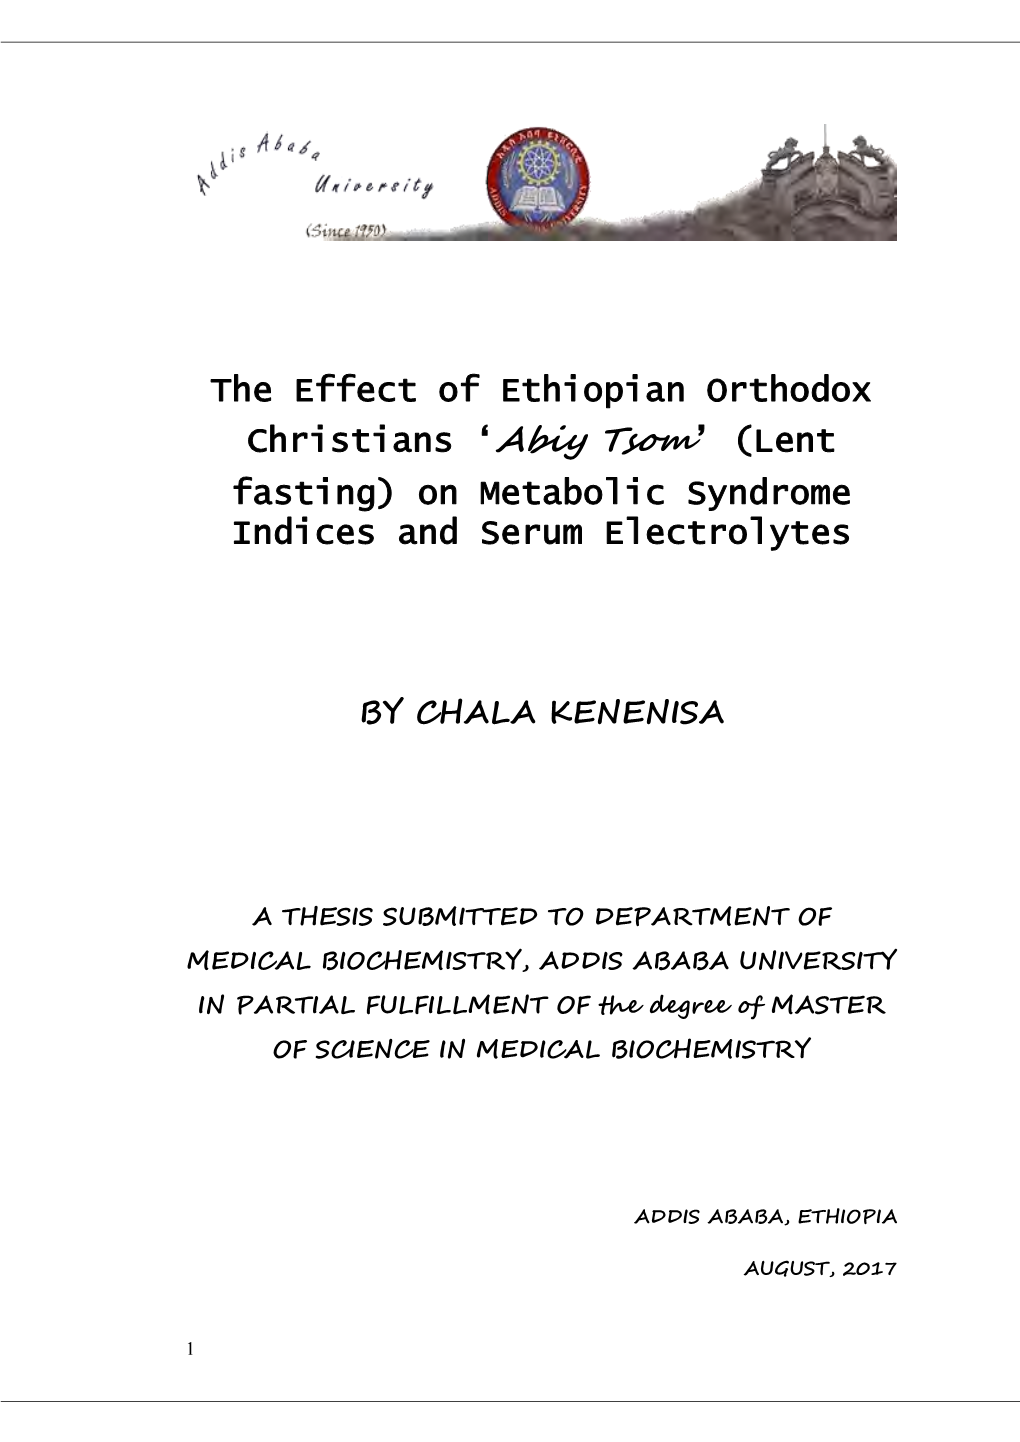 The Effect of Ethiopian Orthodox Christians 'Abiy Tsom' (Lent Fasting